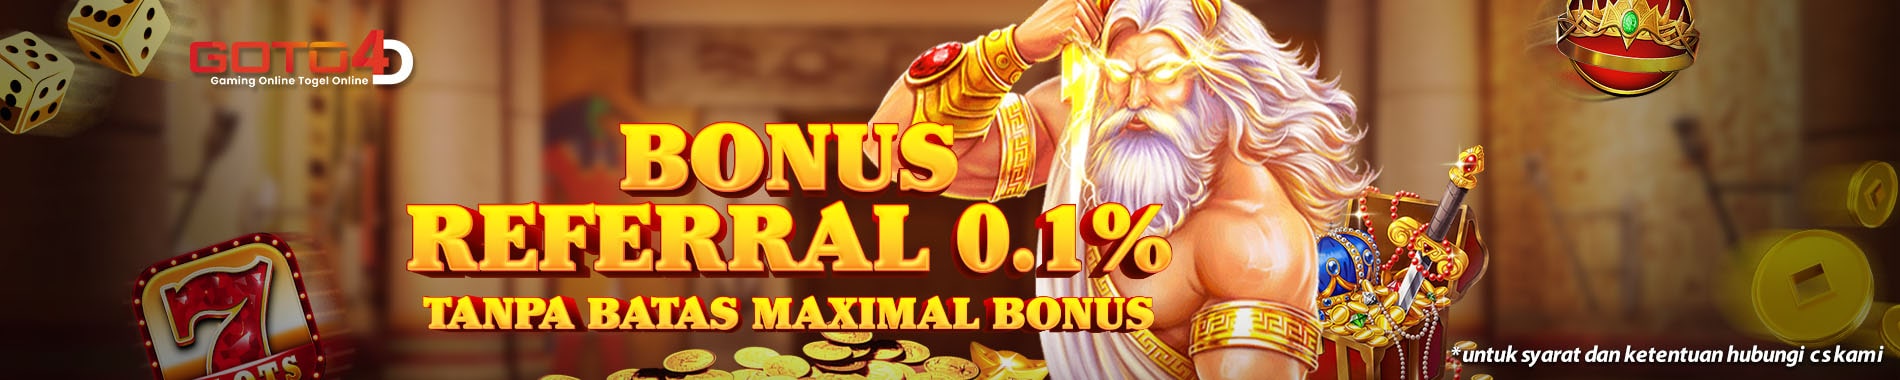 bonus referal 0.1%